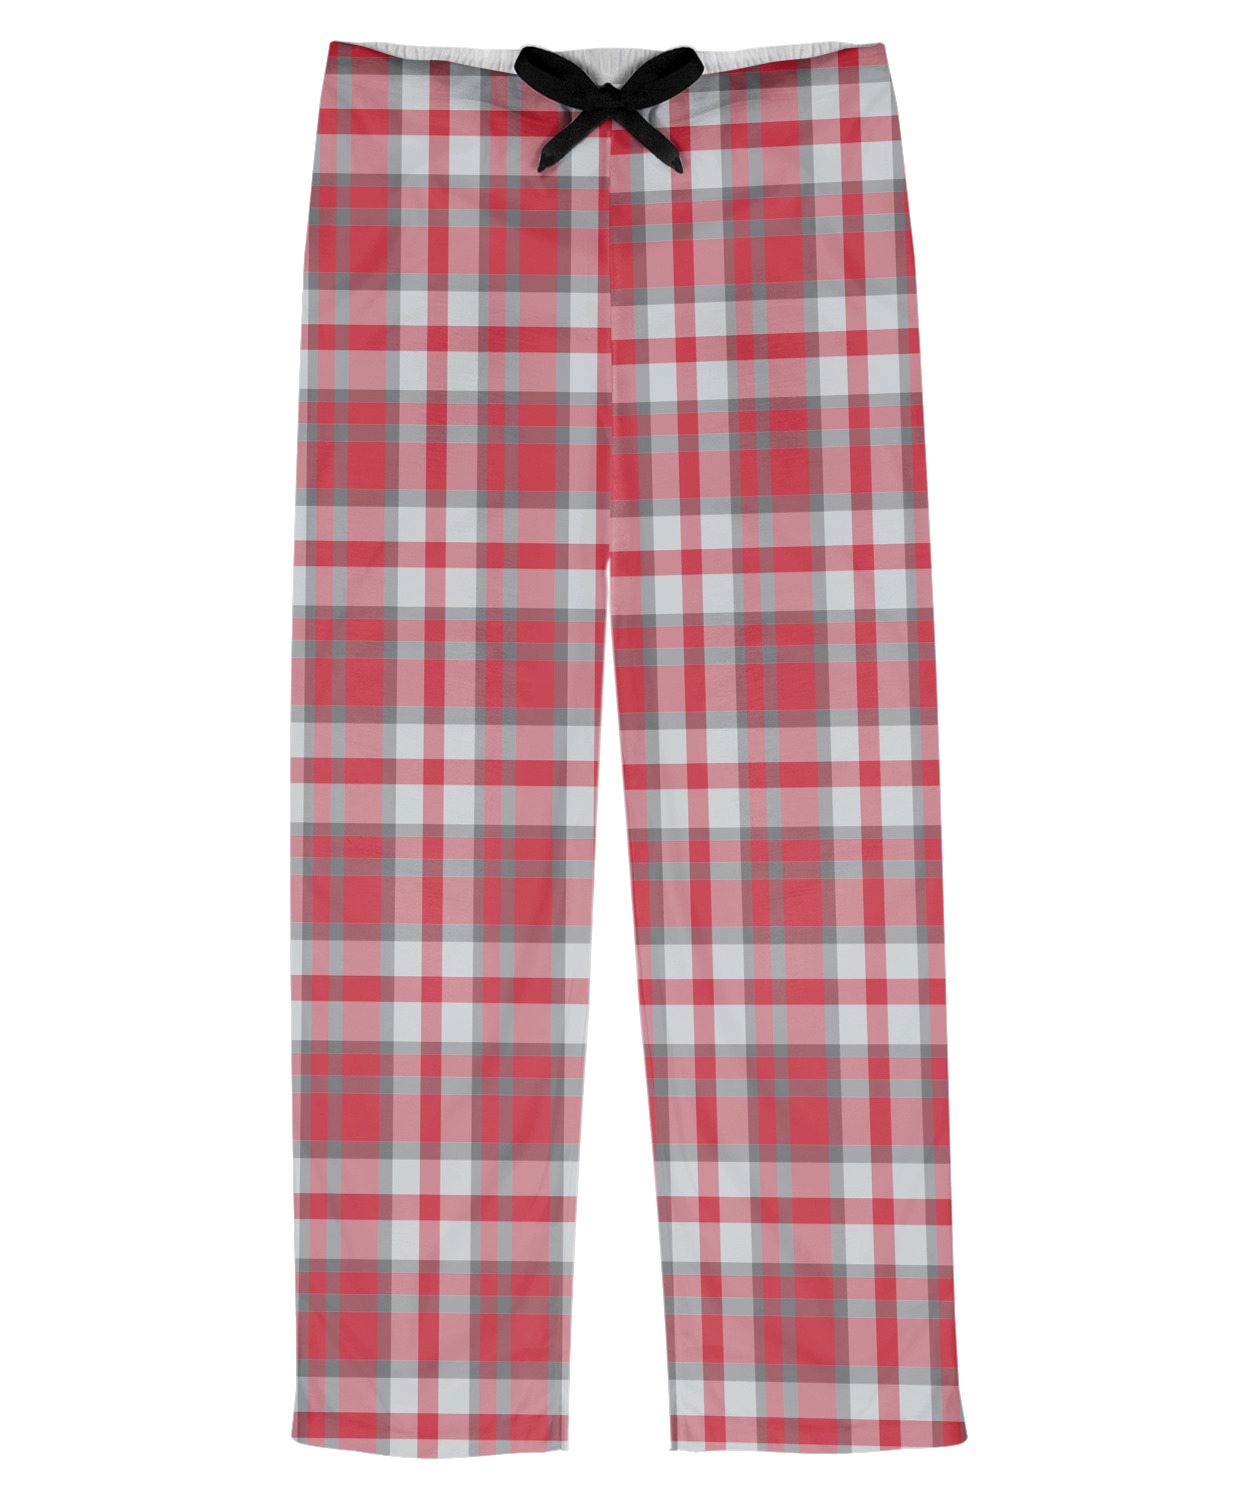 https://www.youcustomizeit.com/common/MAKE/193555/Red-Gray-Plaid-Mens-Pajama-Pants-Flat.jpg?lm=1573049493